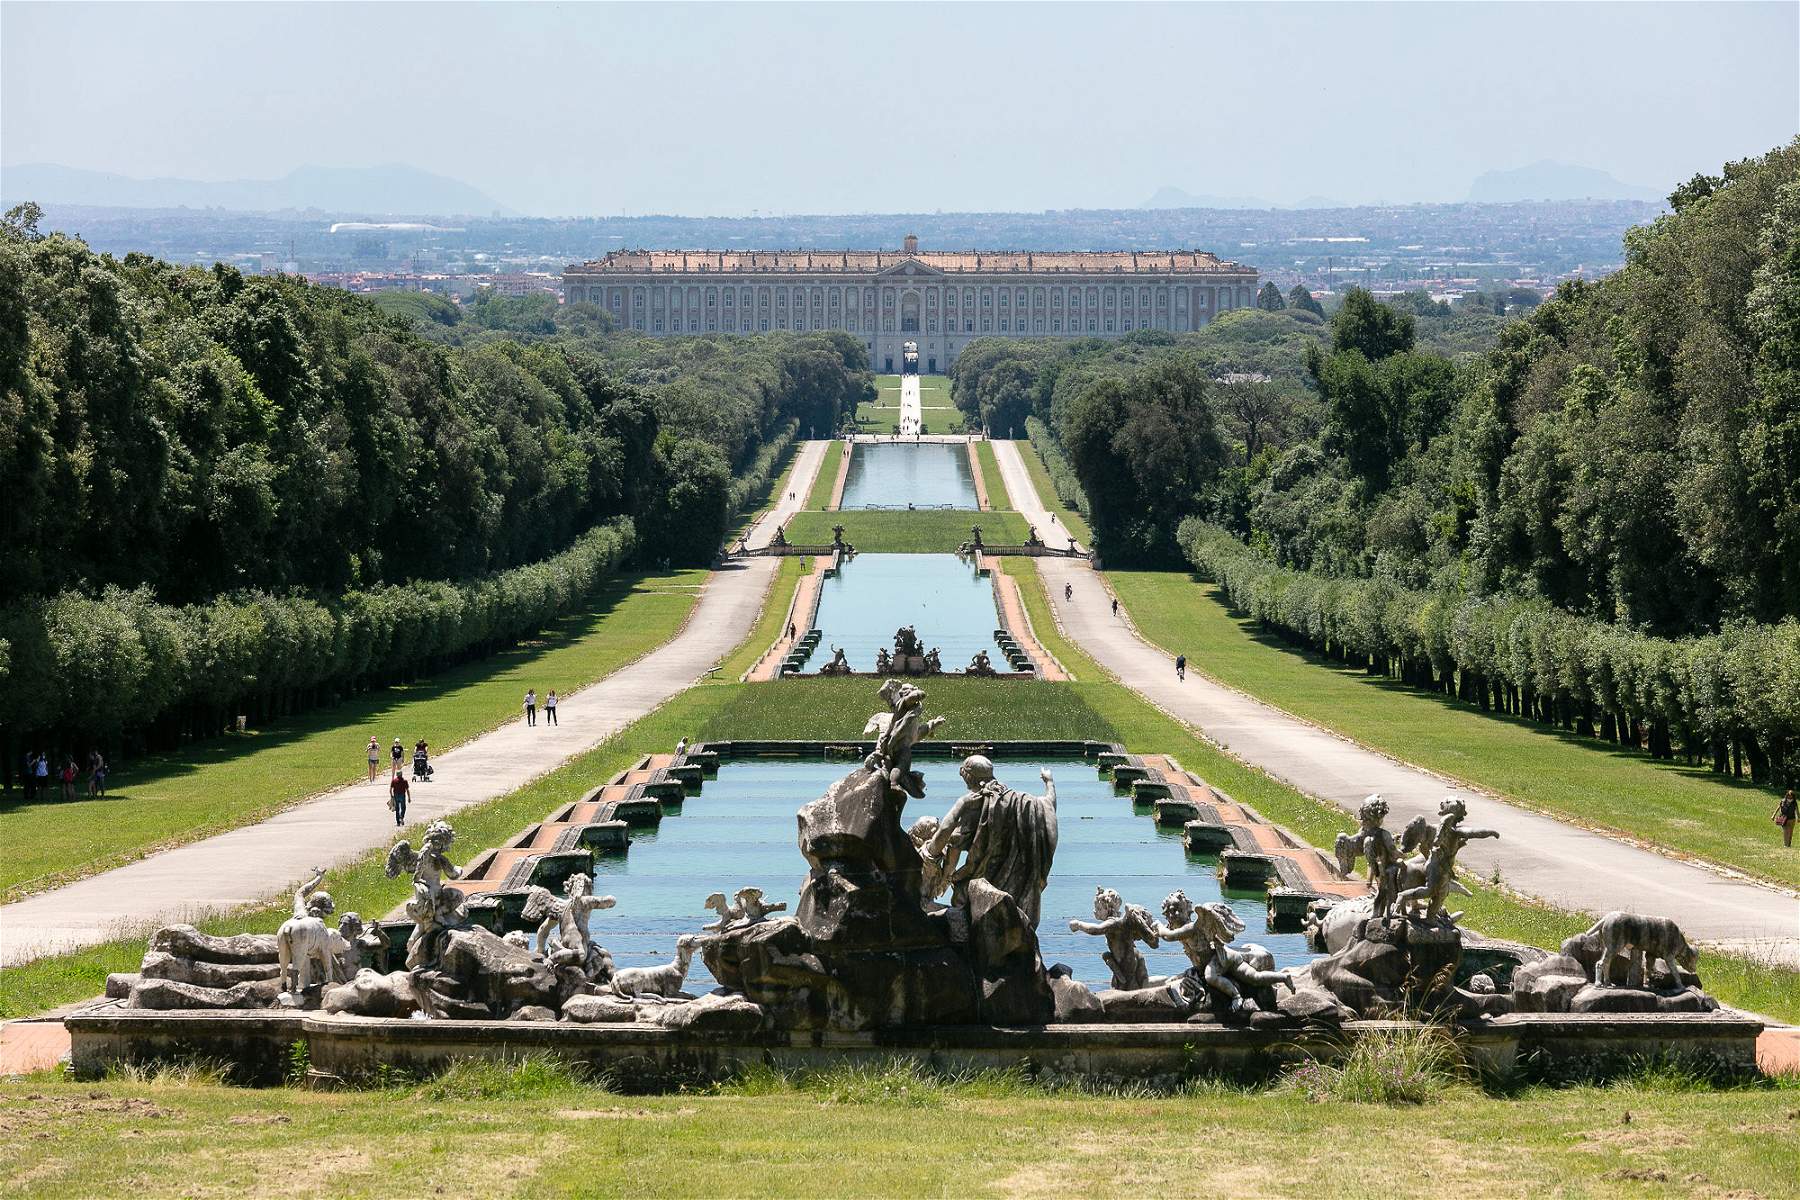 La Reggia di Caserta et la Regione Campania signent un accord pour la valorisation du Parc Royal